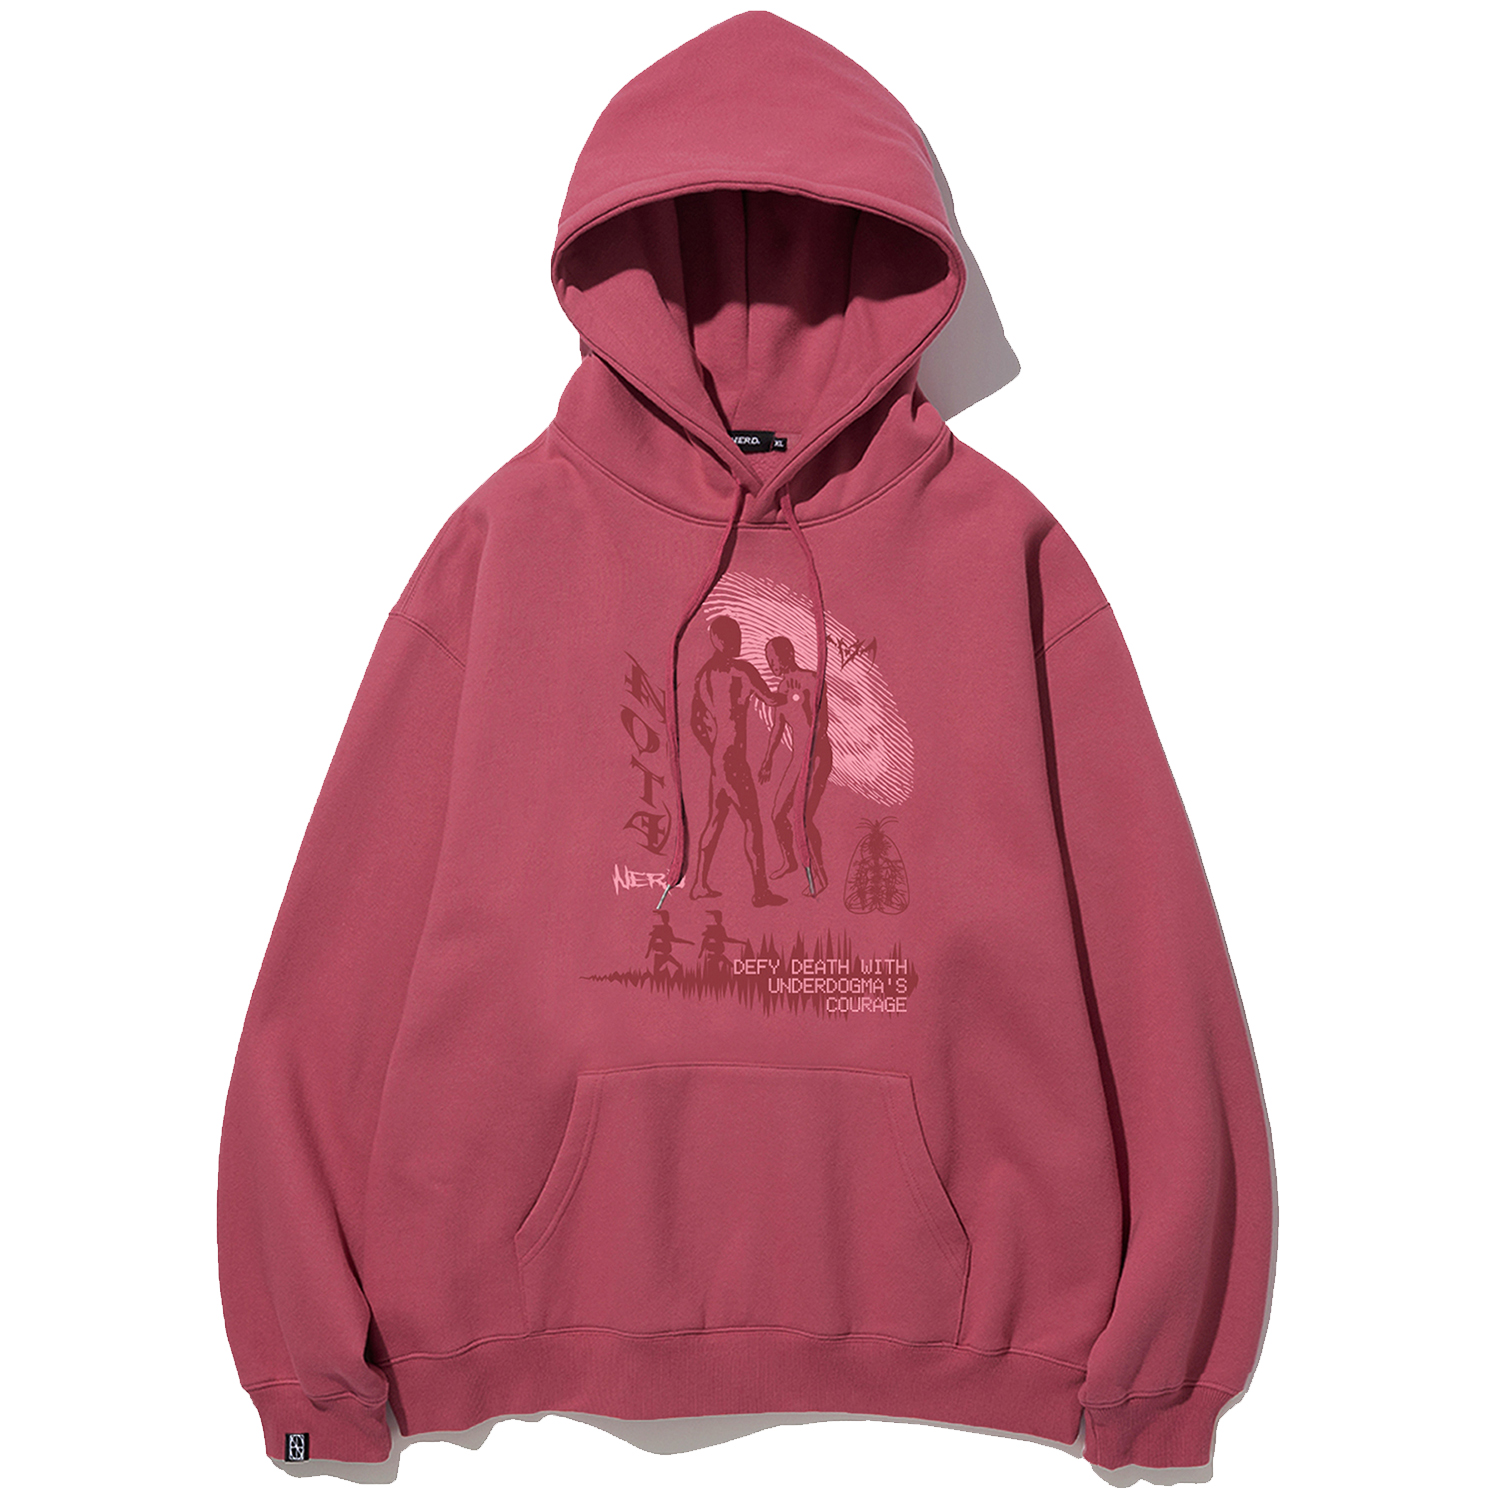 Defy Death Pullover Hood - Pink,NOT4NERD